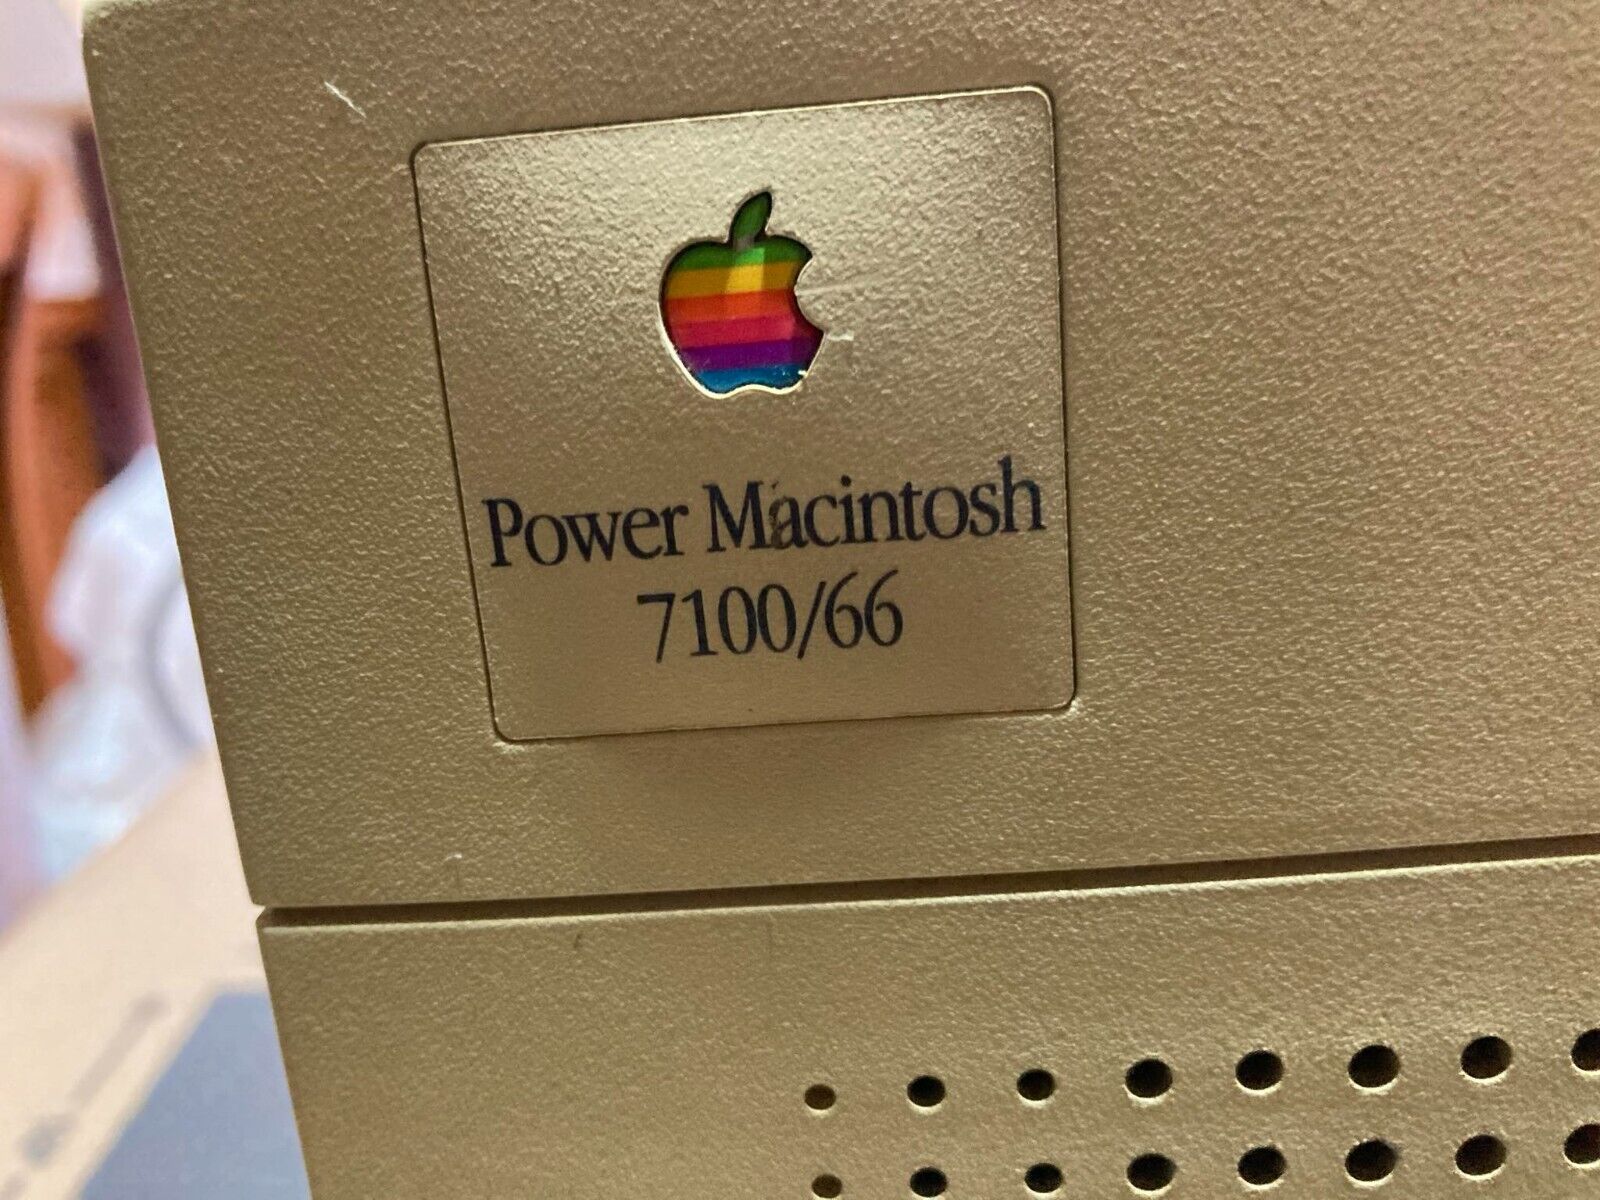 Vintage Apple Power Macintosh 7100/66 - Rare Old Computer System